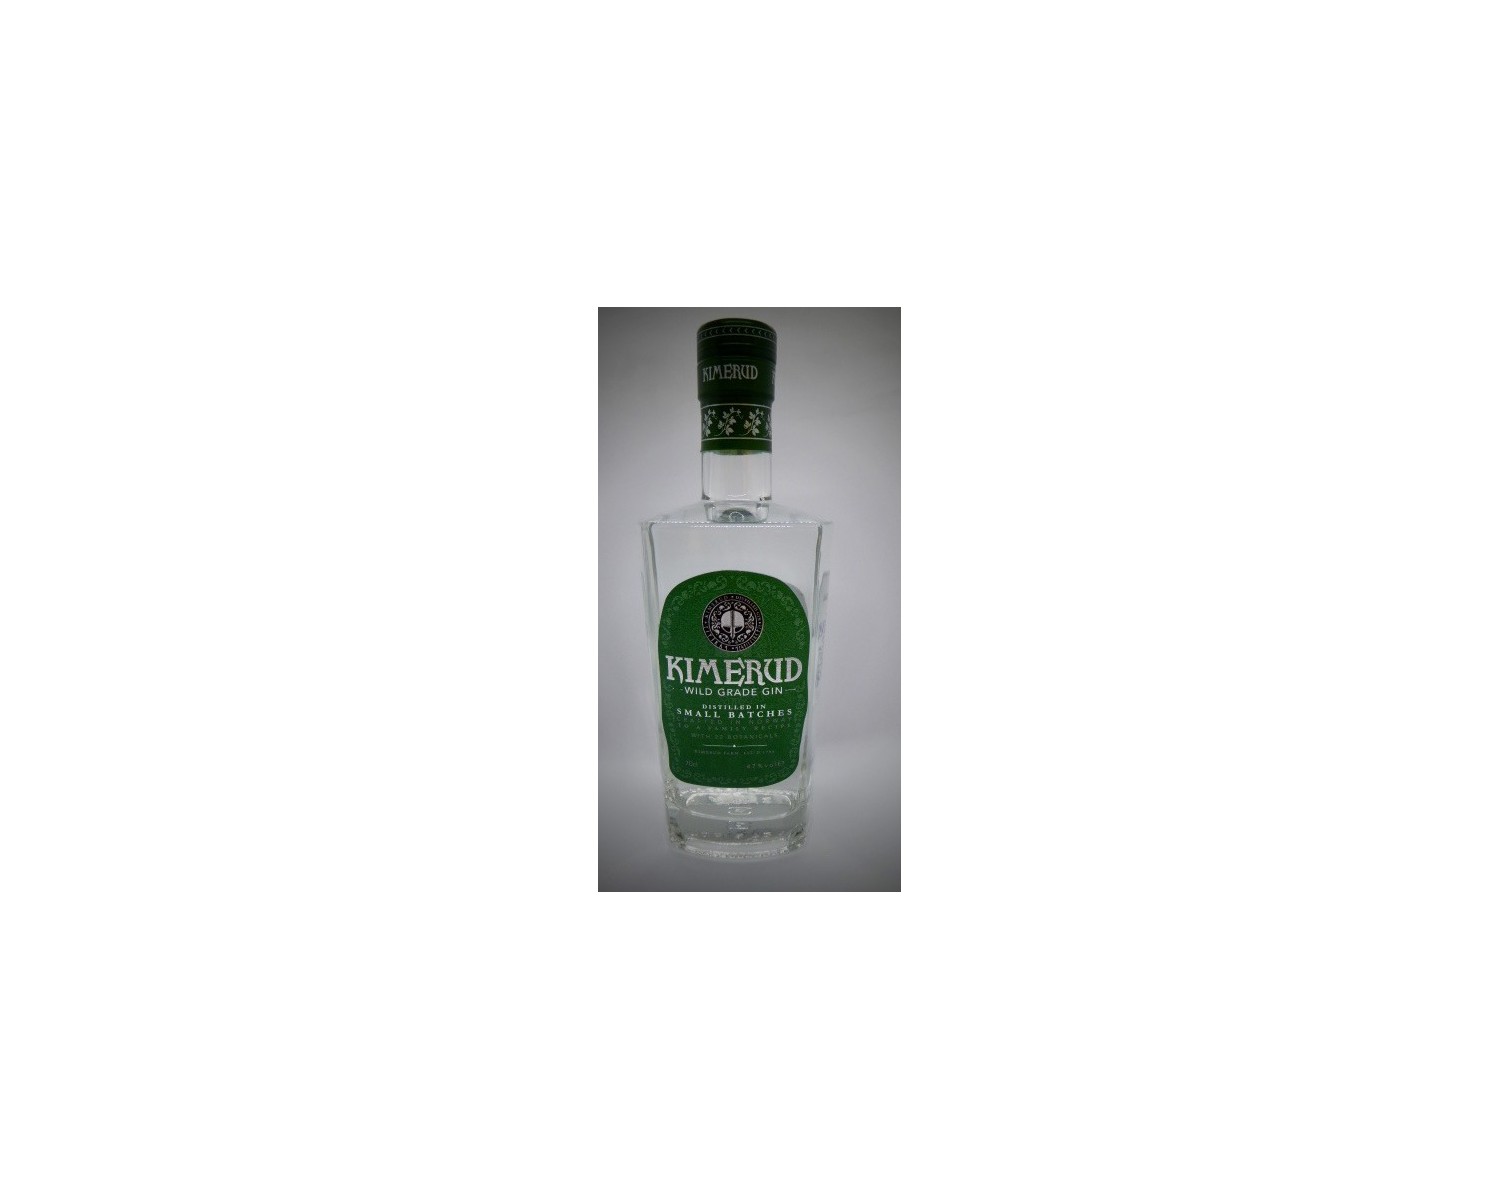 Kimerud Wild Grade Gin 47% vol., 0,7L